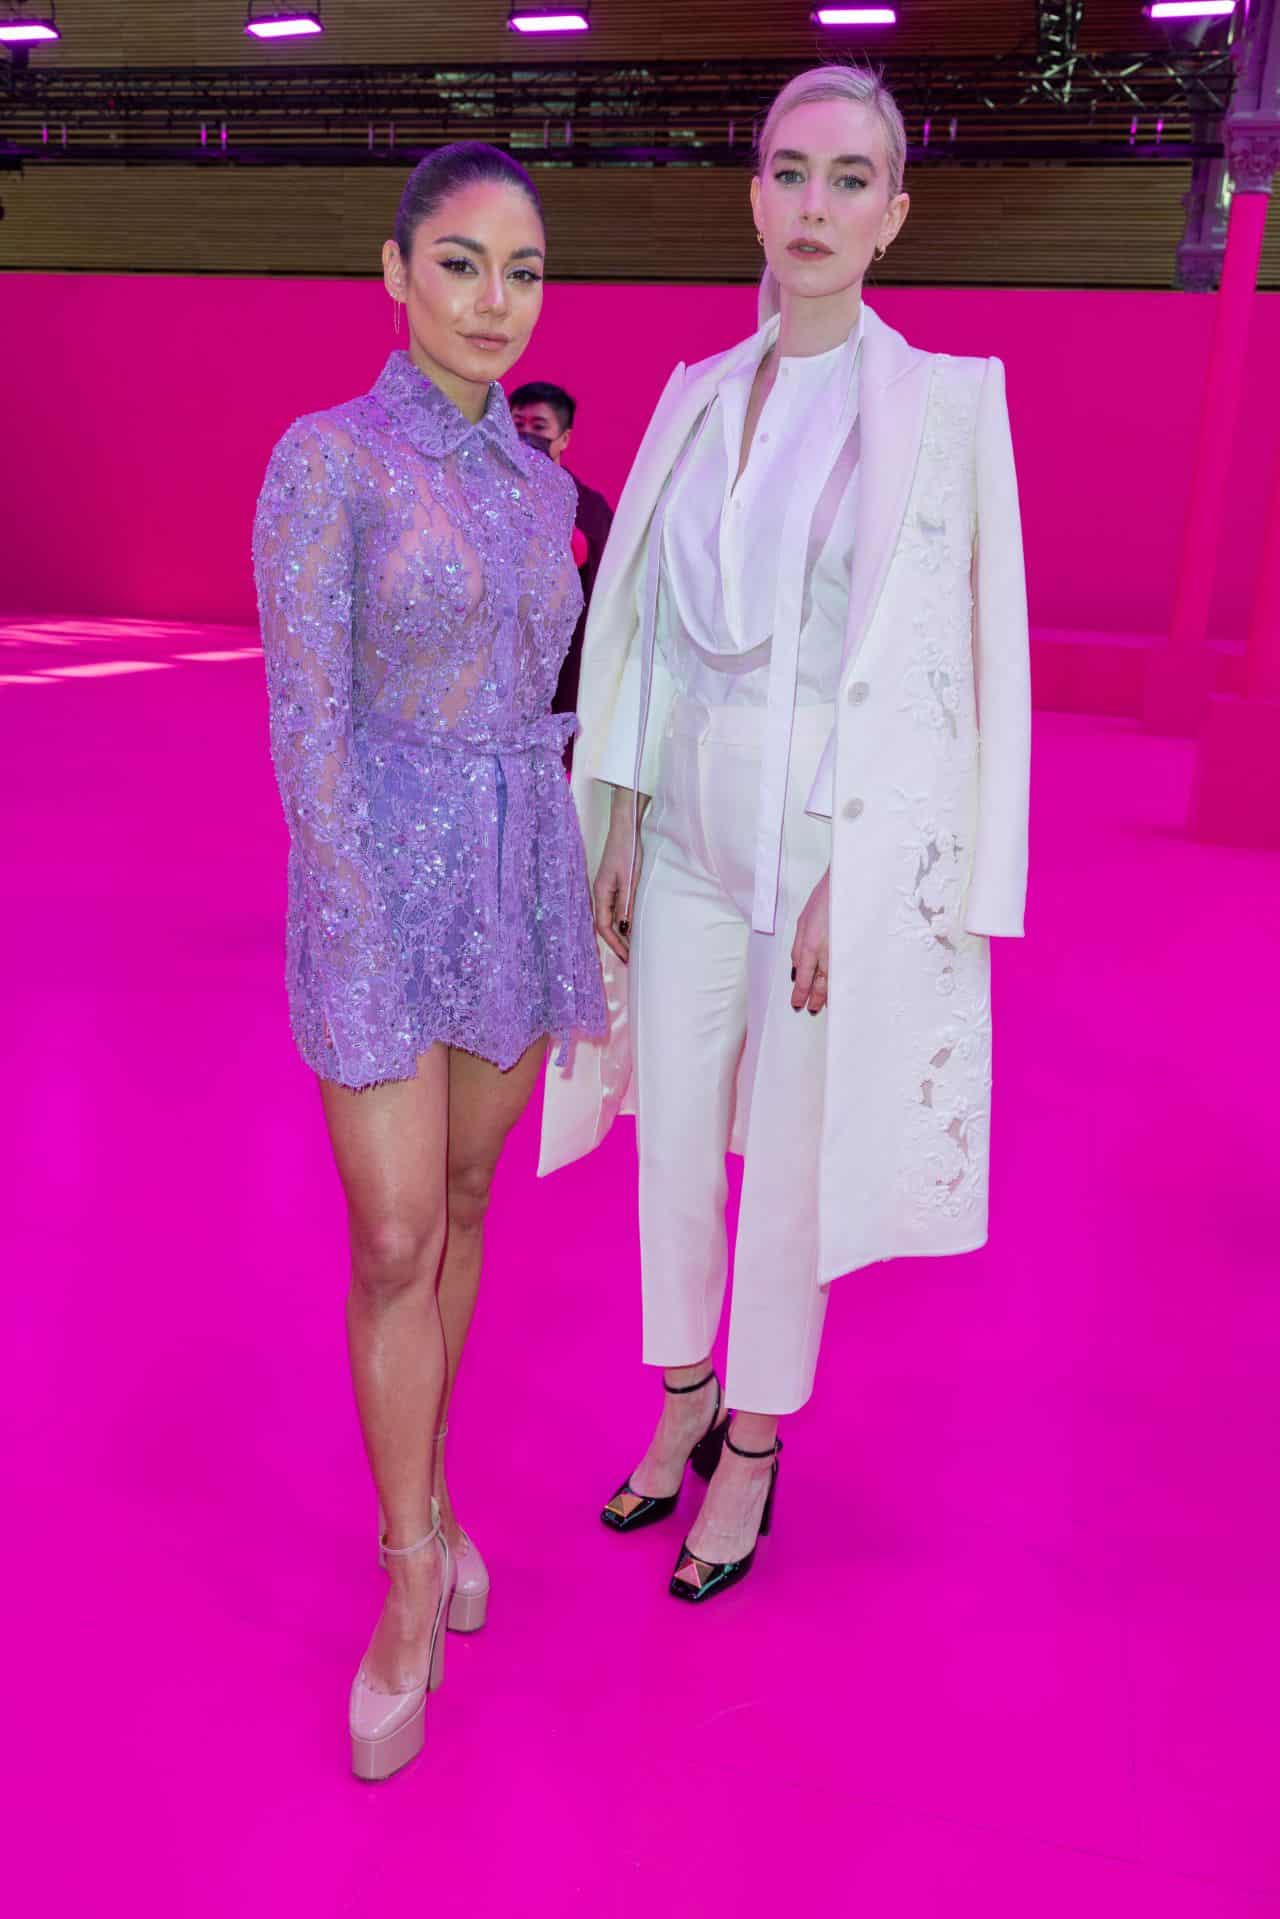 Vanessa Hudgens Turns Up the Heat in Purple Mini Dress at Valentino Show